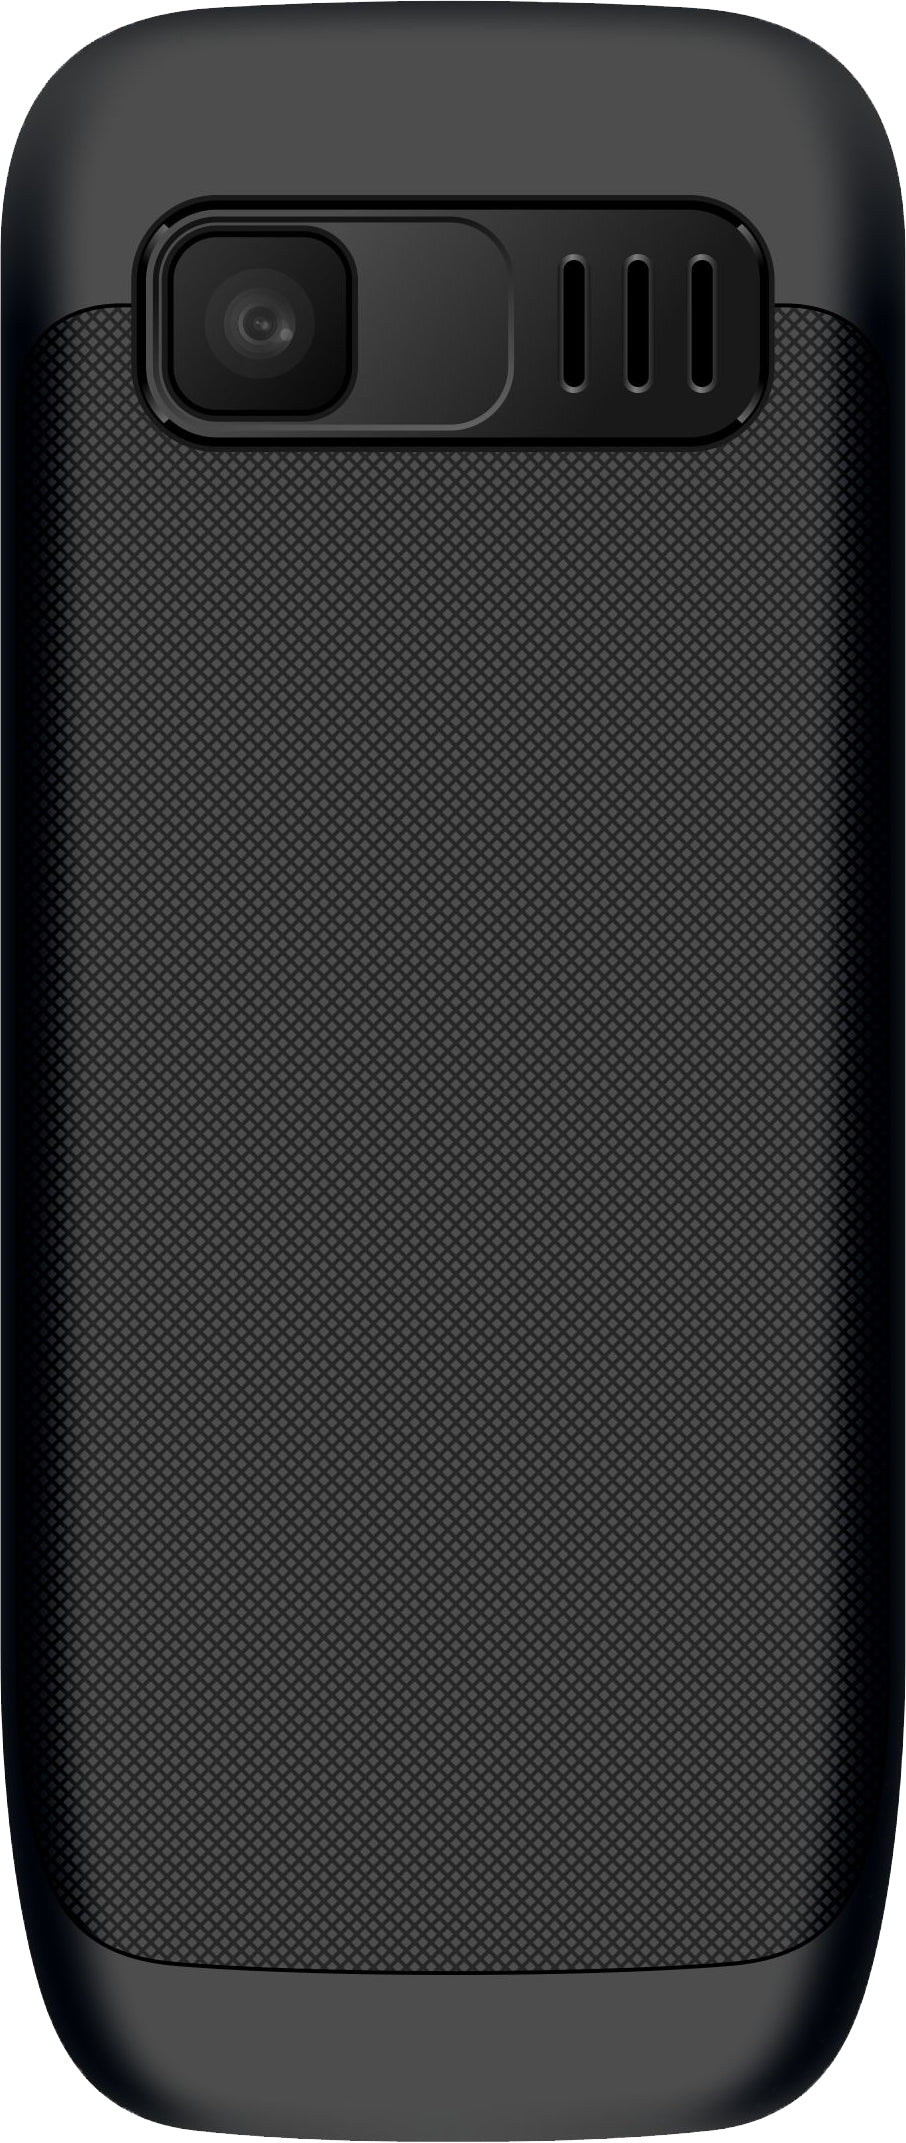 Maxcom Classic MM134 1.77" Dual SIM 2G Teléfono celular negro (MM134Black)